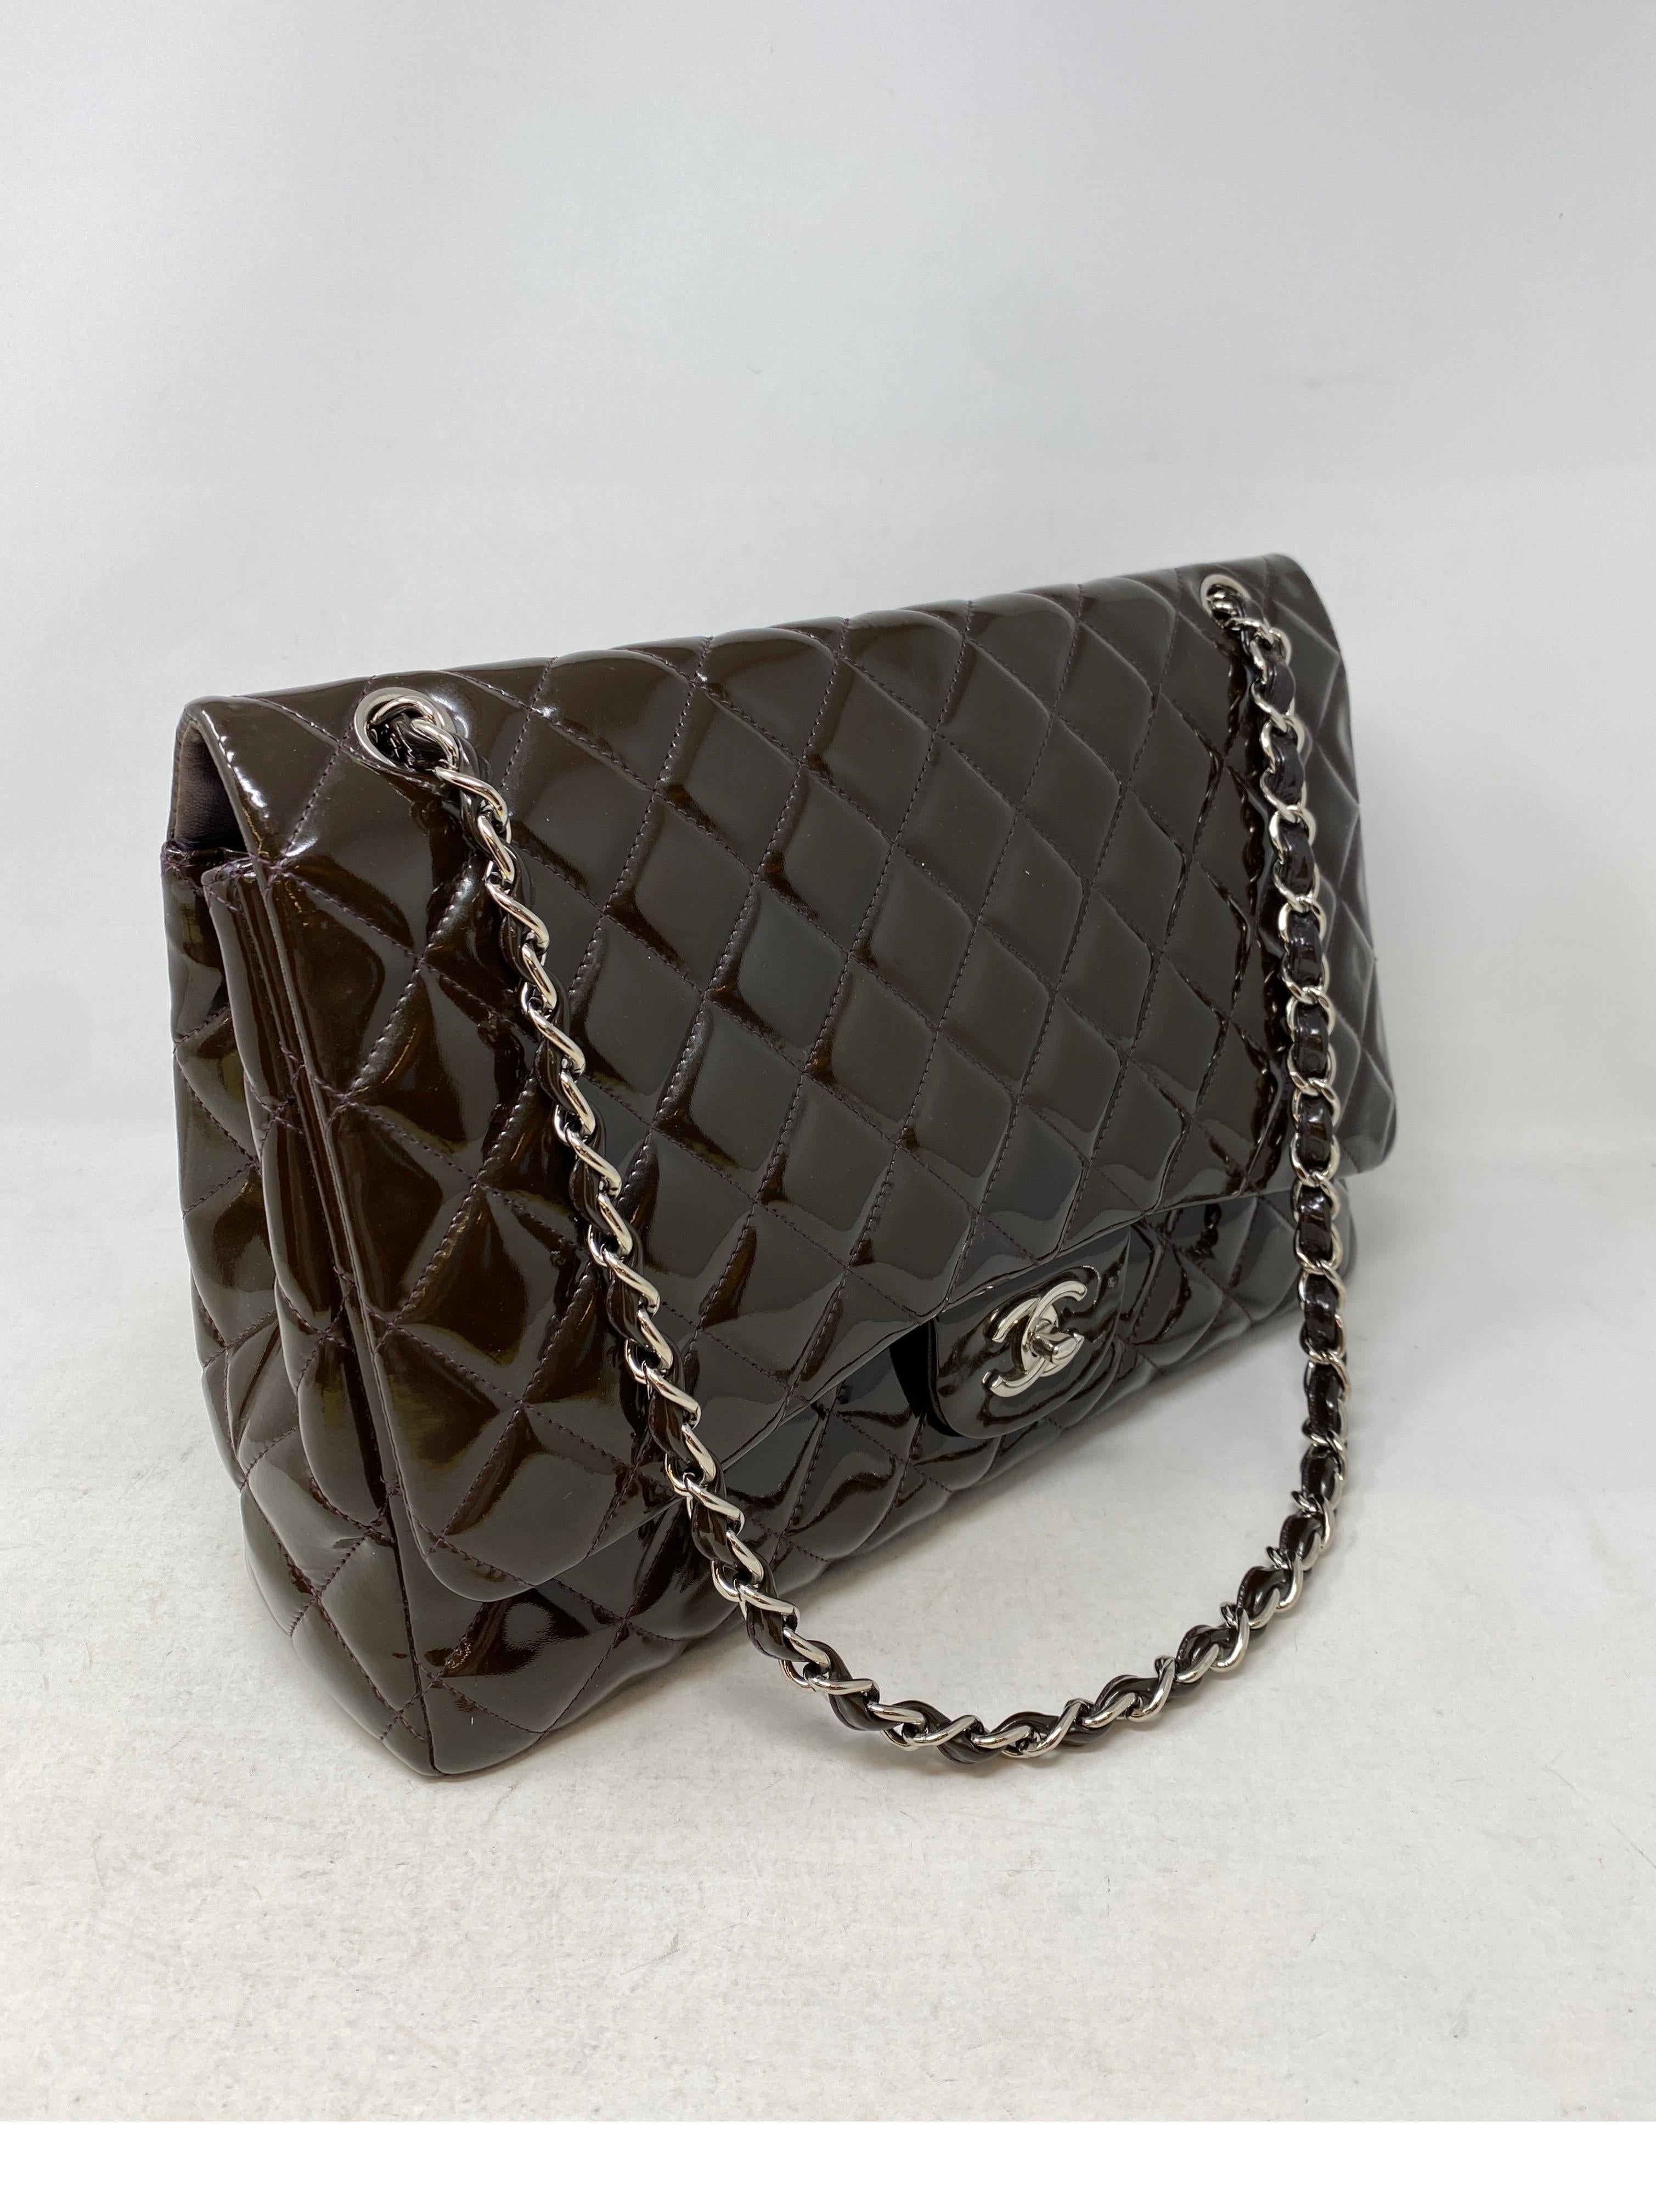 Chanel Jumbo Brown Patent Leather Bag. Nice chocolate brown patent bag. Silver hardware. Jumbo size 12